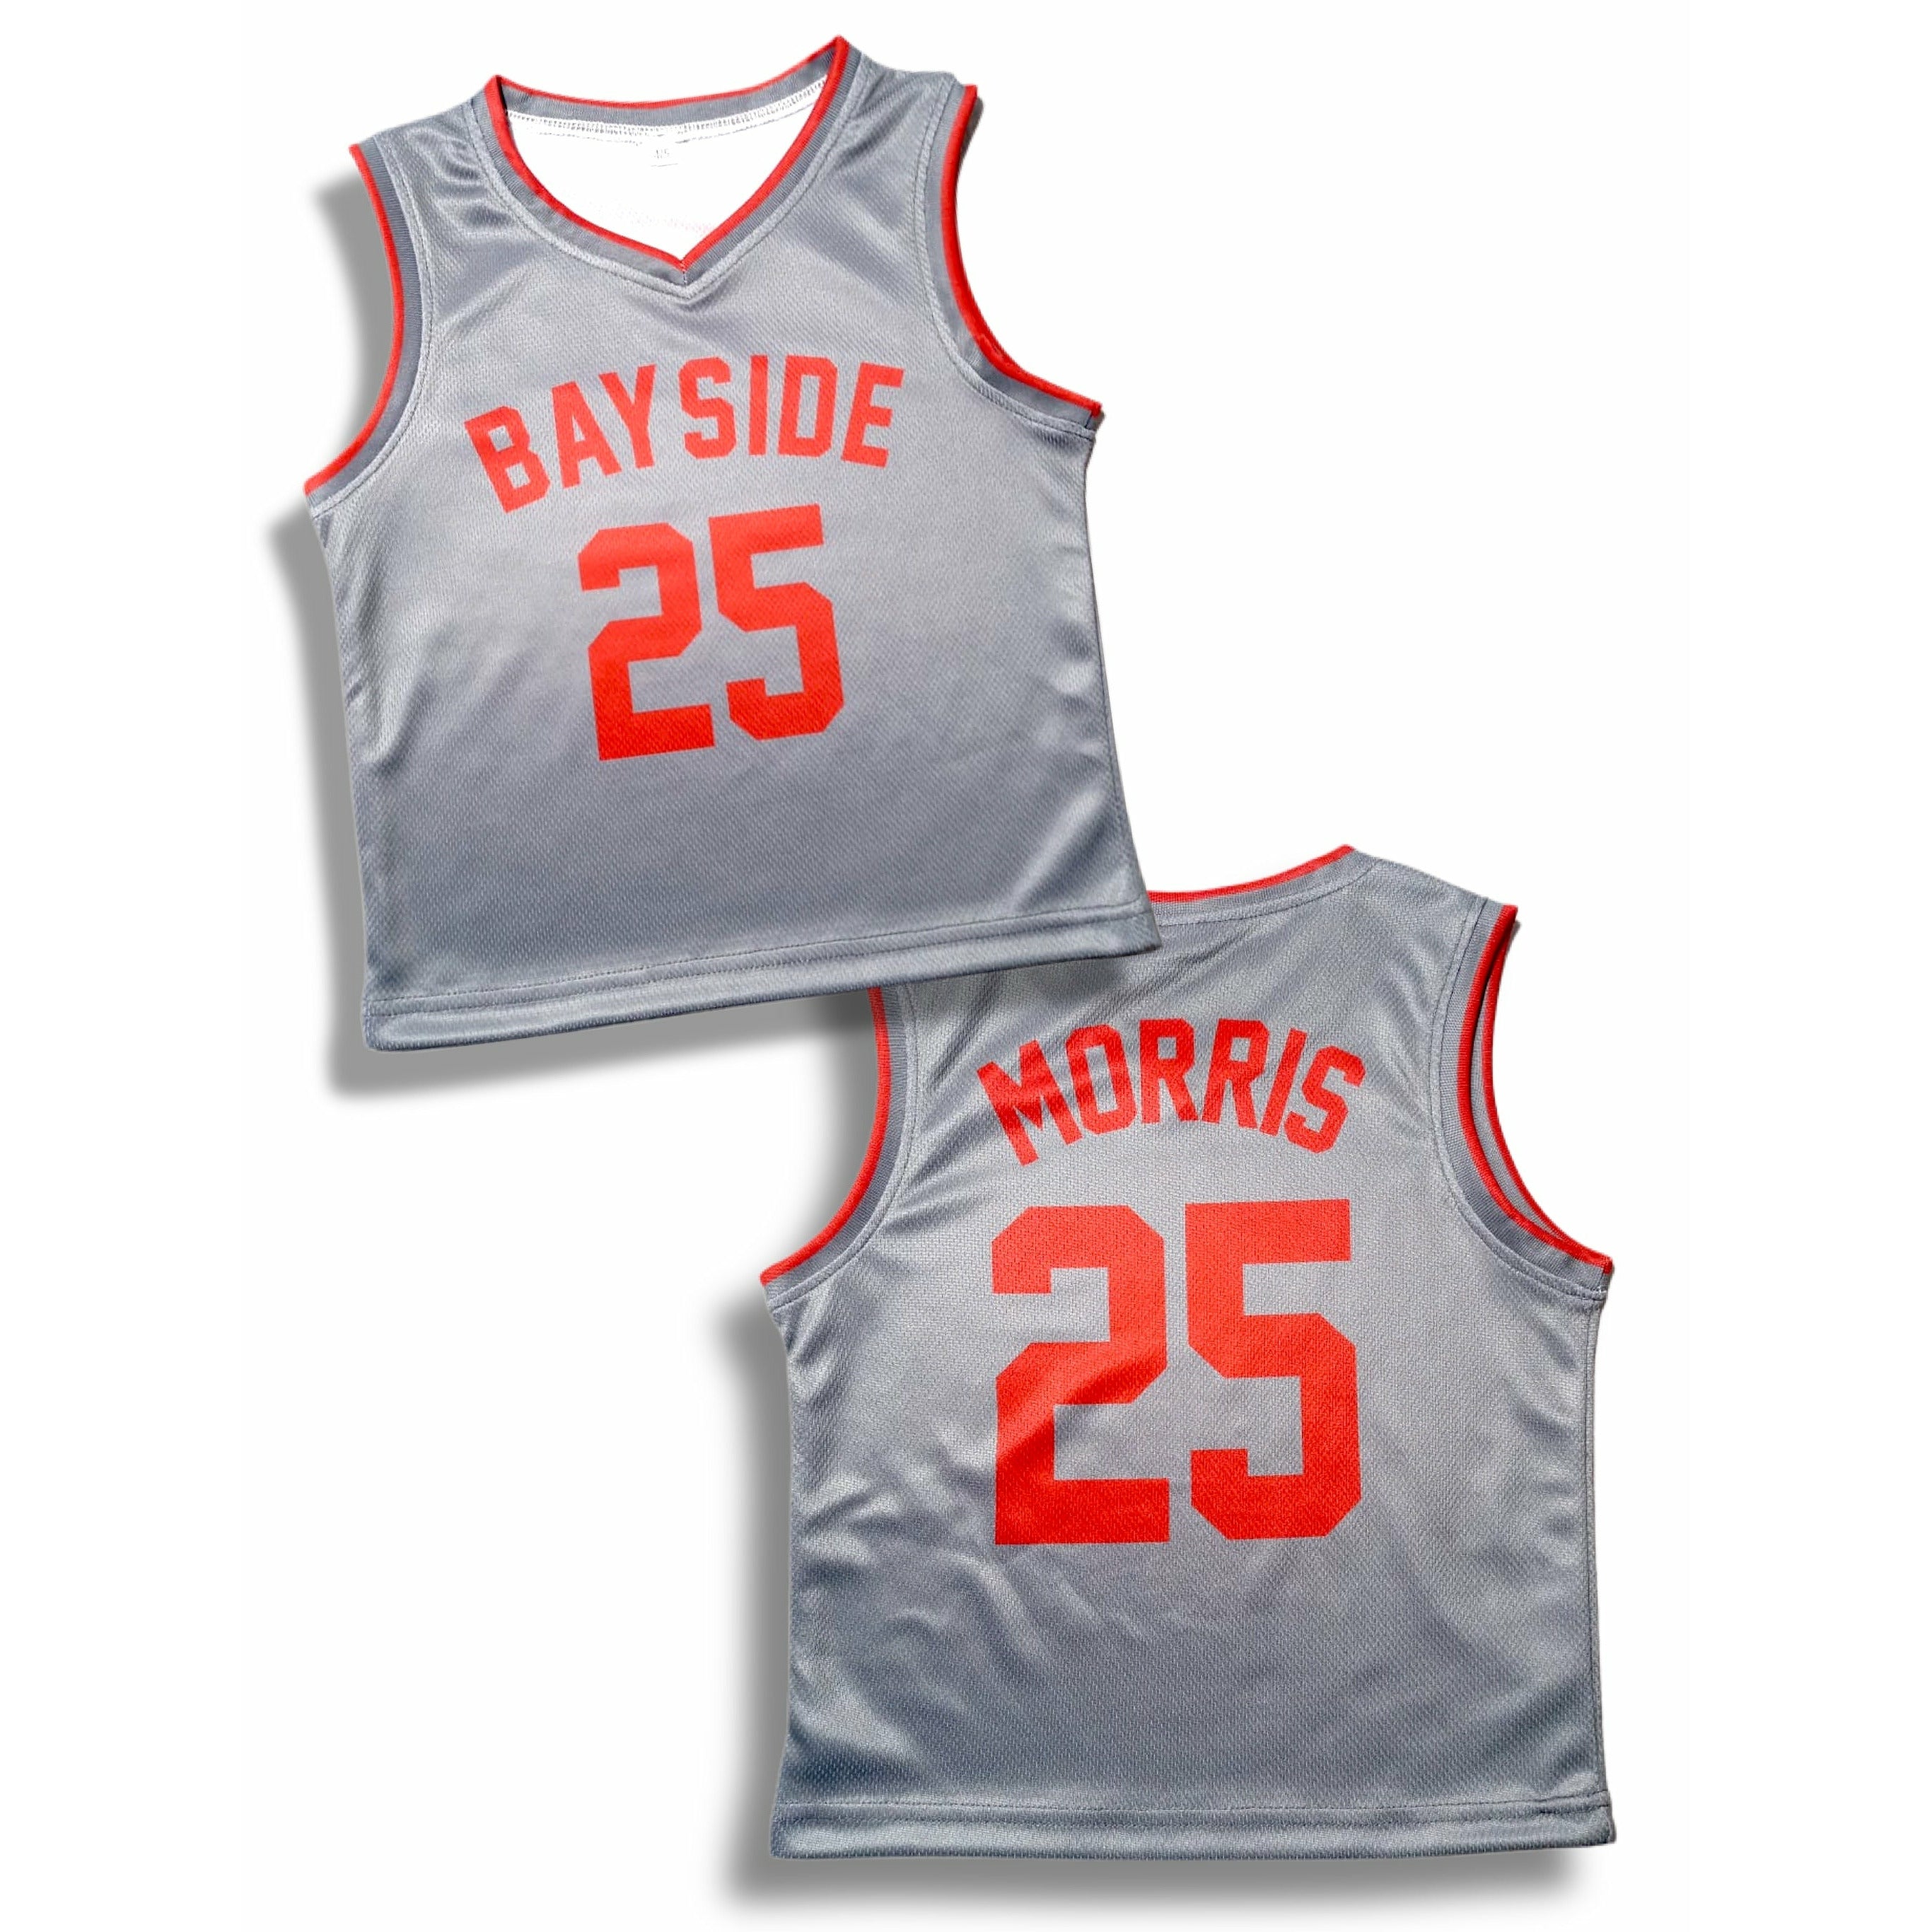 Kids Bayside Basketball jersey